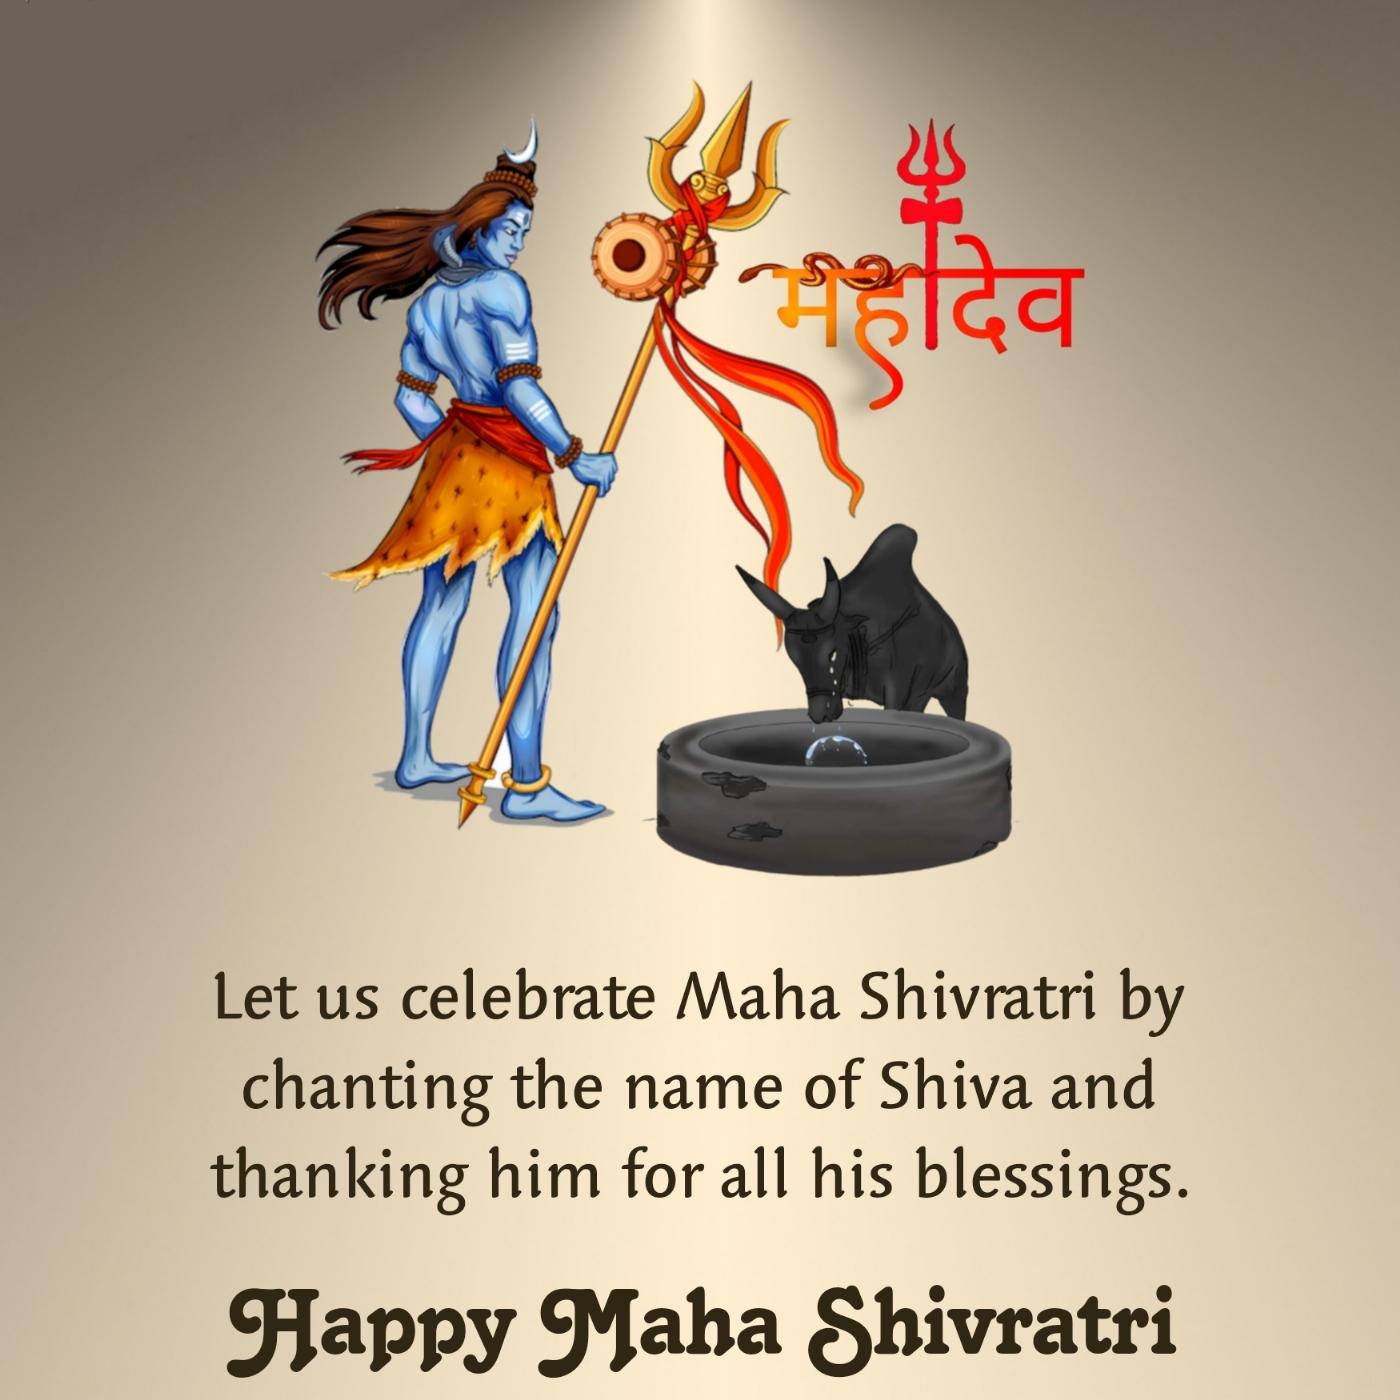 Let us celebrate Maha Shivratri by chanting the name of Shiva